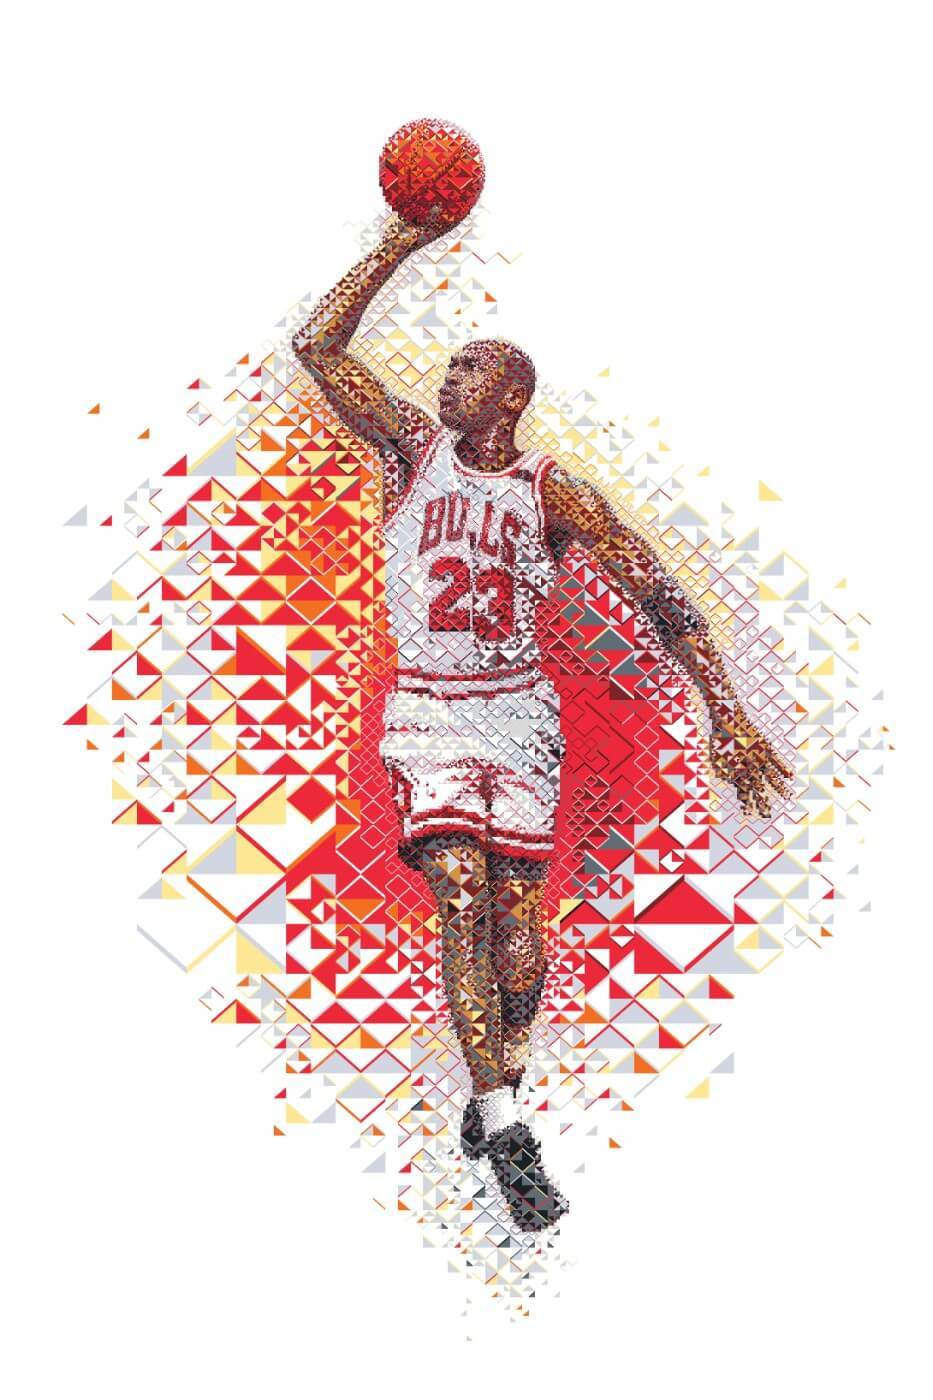 Spirit Of Sports - Digital Art - Basketball Great - Michael Jordan -  Chicago Bulls - Canvas Prints by Kimberli Verdun, Buy Posters, Frames,  Canvas & Digital Art Prints